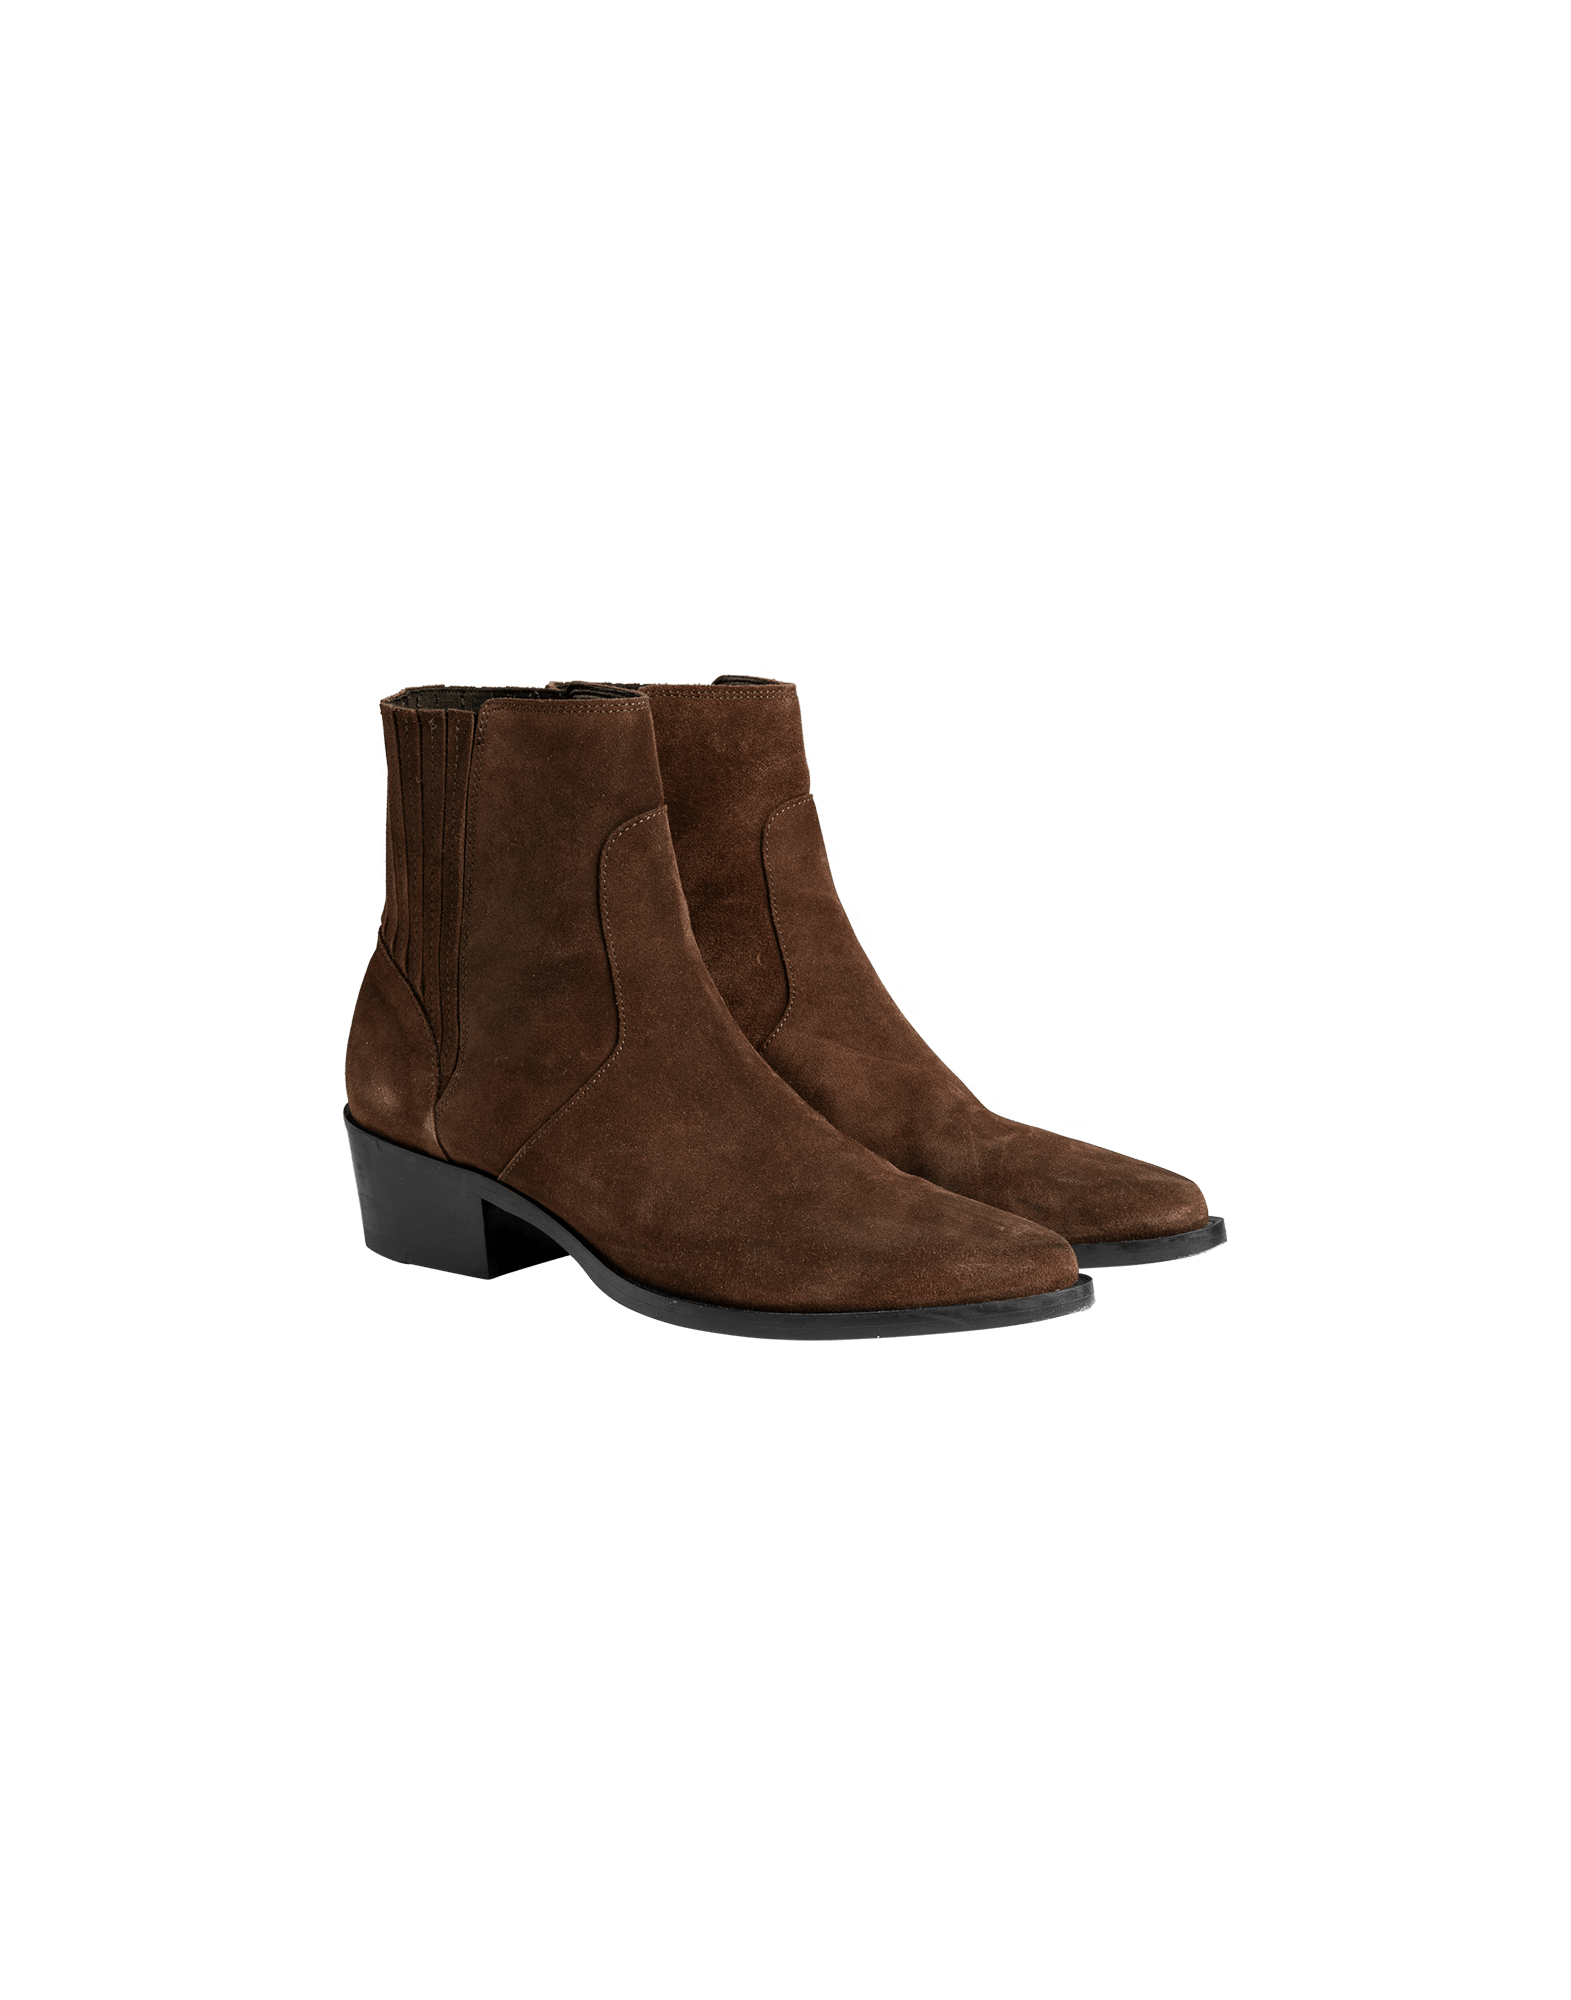 EN ROUTE: Chestnut brown suede Chelsea boot